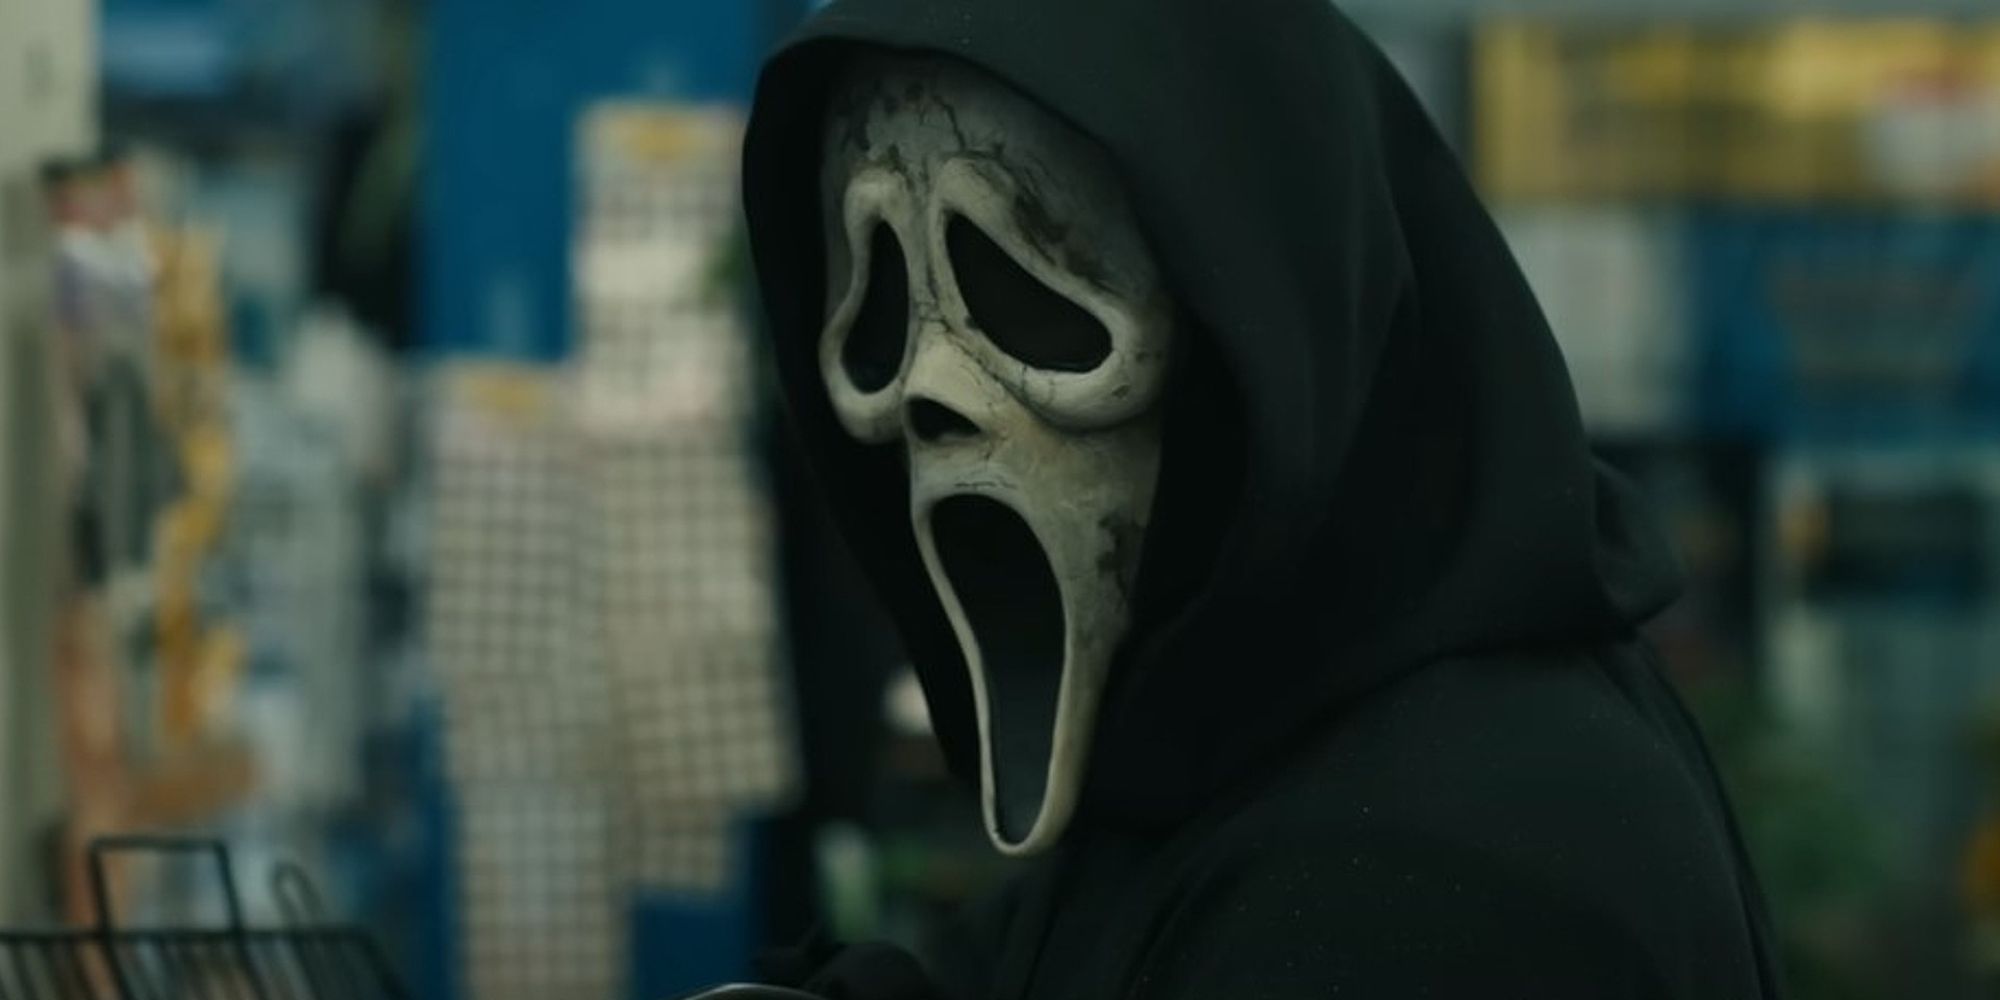 The Ghostface killer in Scream 6